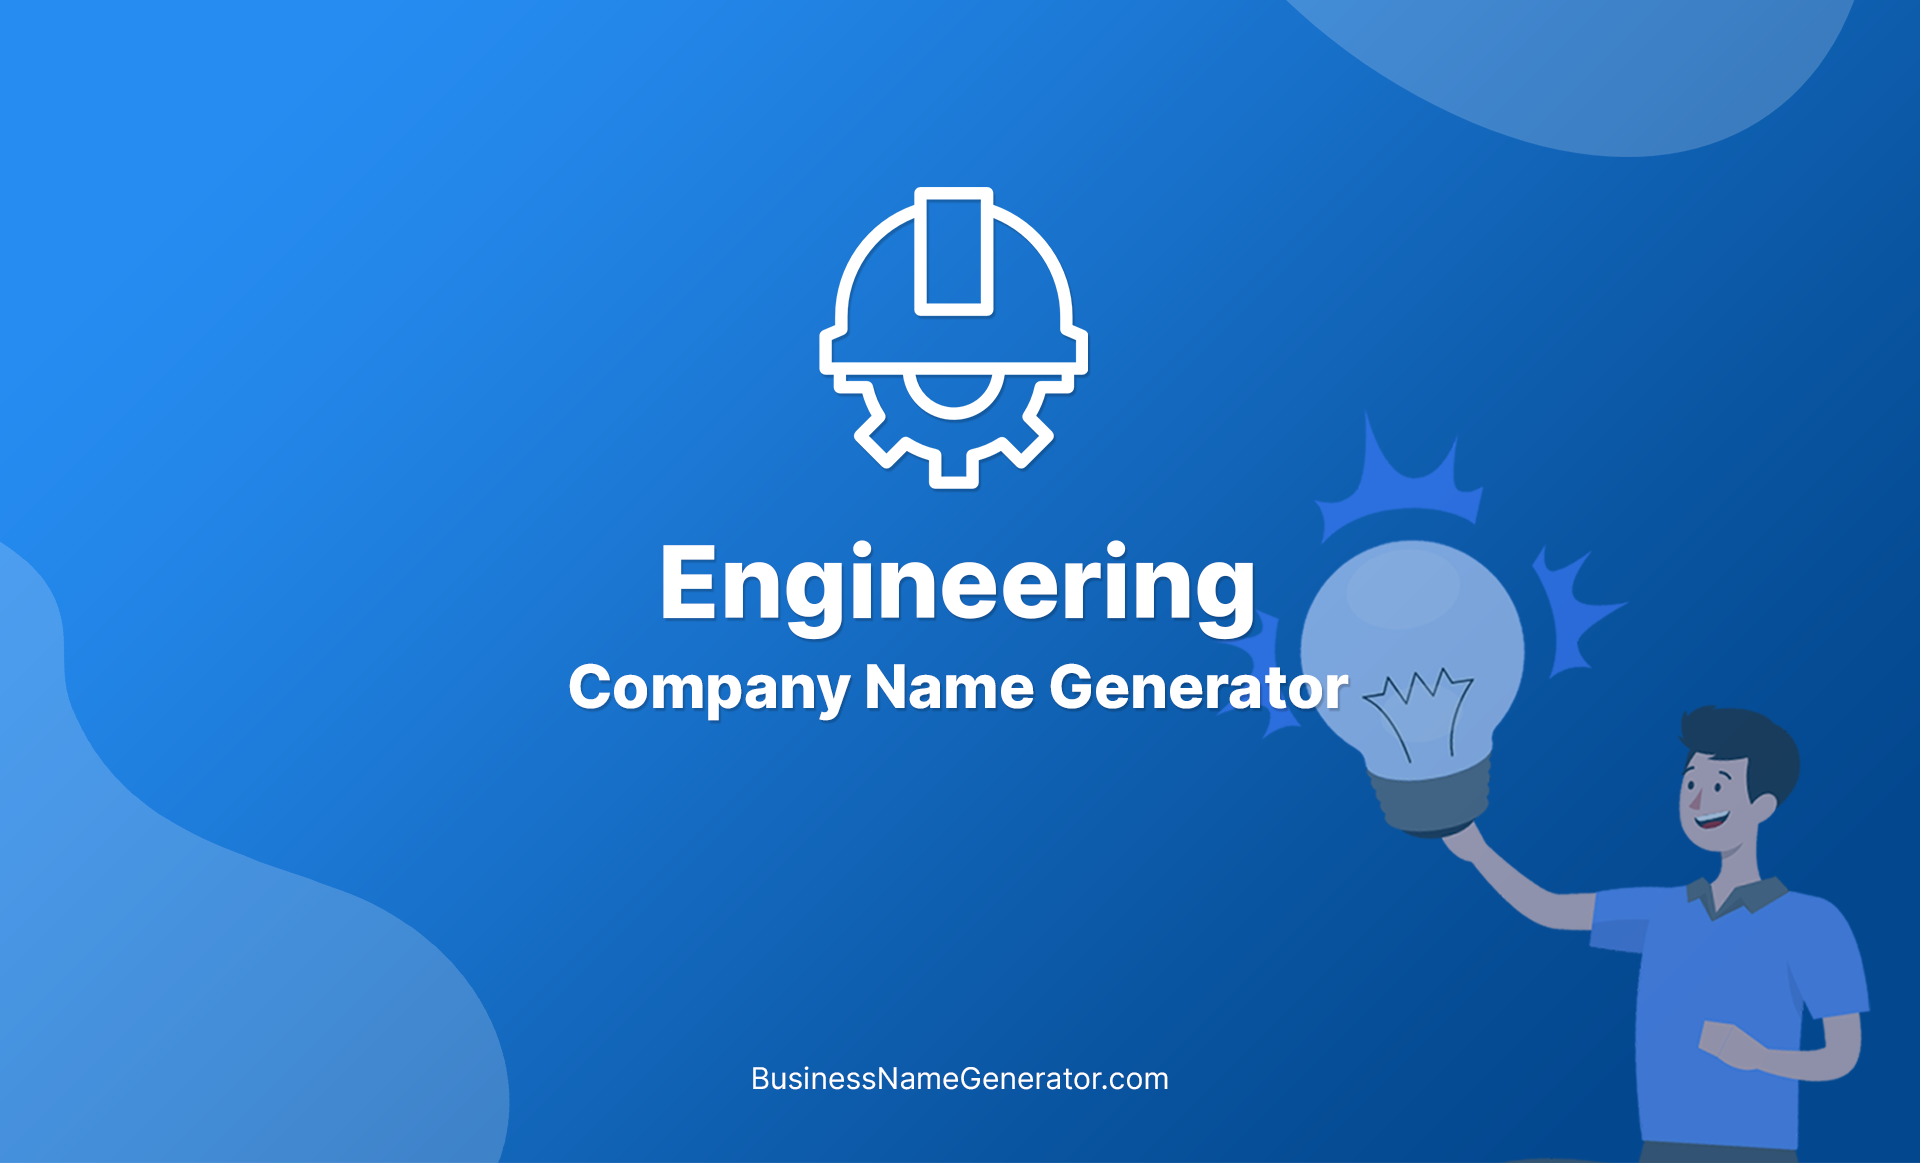 Engineering Company Name Generator